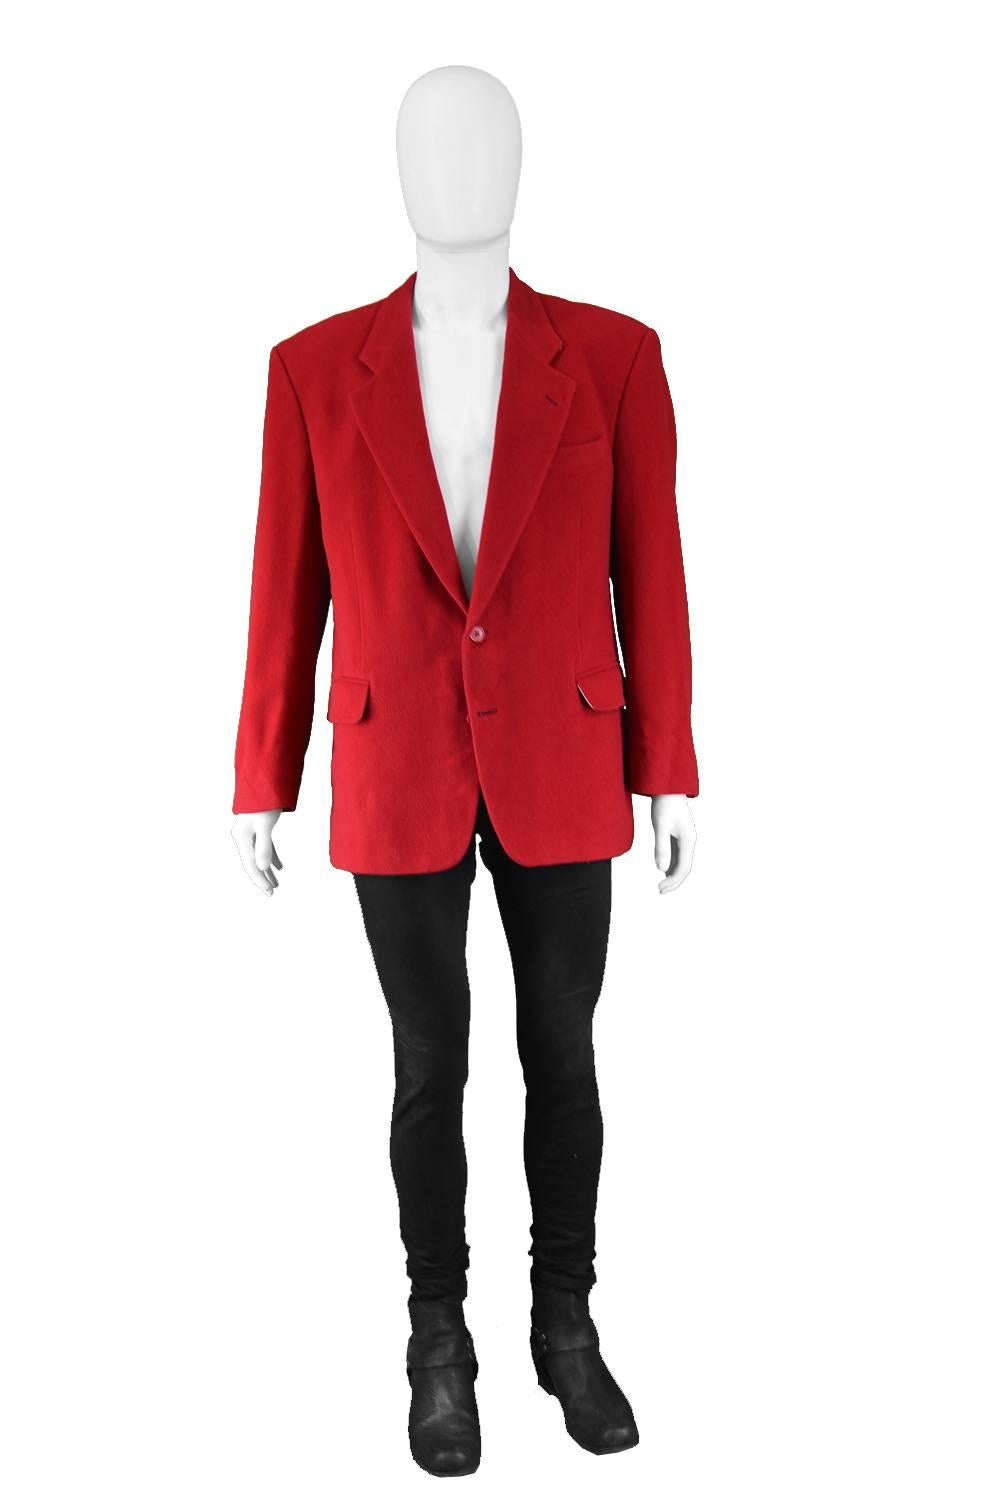 Yves Saint Laurent Men's Vintage Dark Red Wool & Cashmere Blazer, 1980s

Size: Marked 52R which is roughly a men's Large. Please check measurements.
Chest - 42” / 106cm
Waist - 40” / 101cm
Length (Shoulder to Hem) - 29” / 73cm
Shoulder to